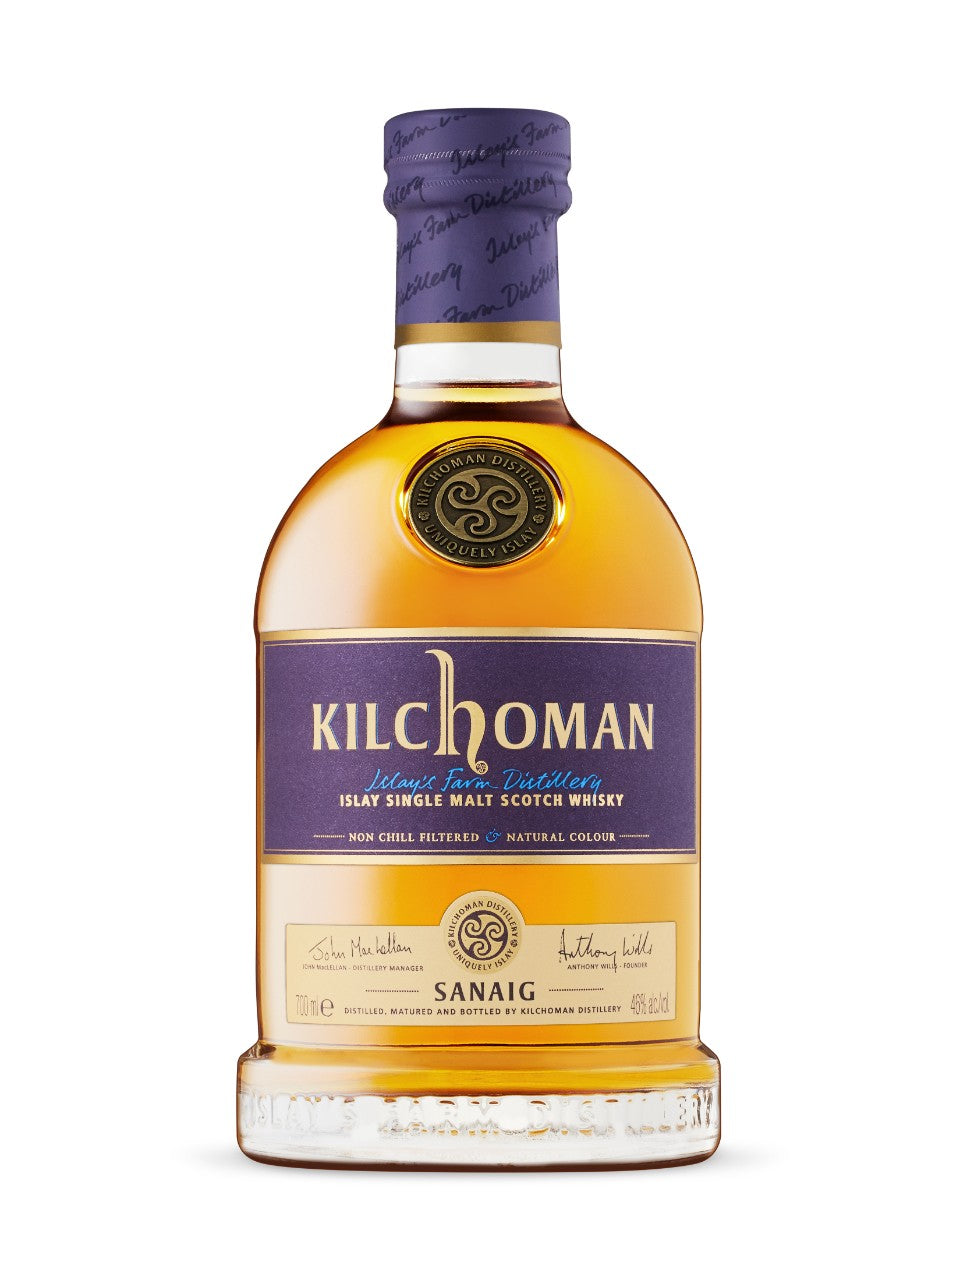 Kilchoman Sanaig Islay Single Malt Scotch Whisky 700 ml bottle